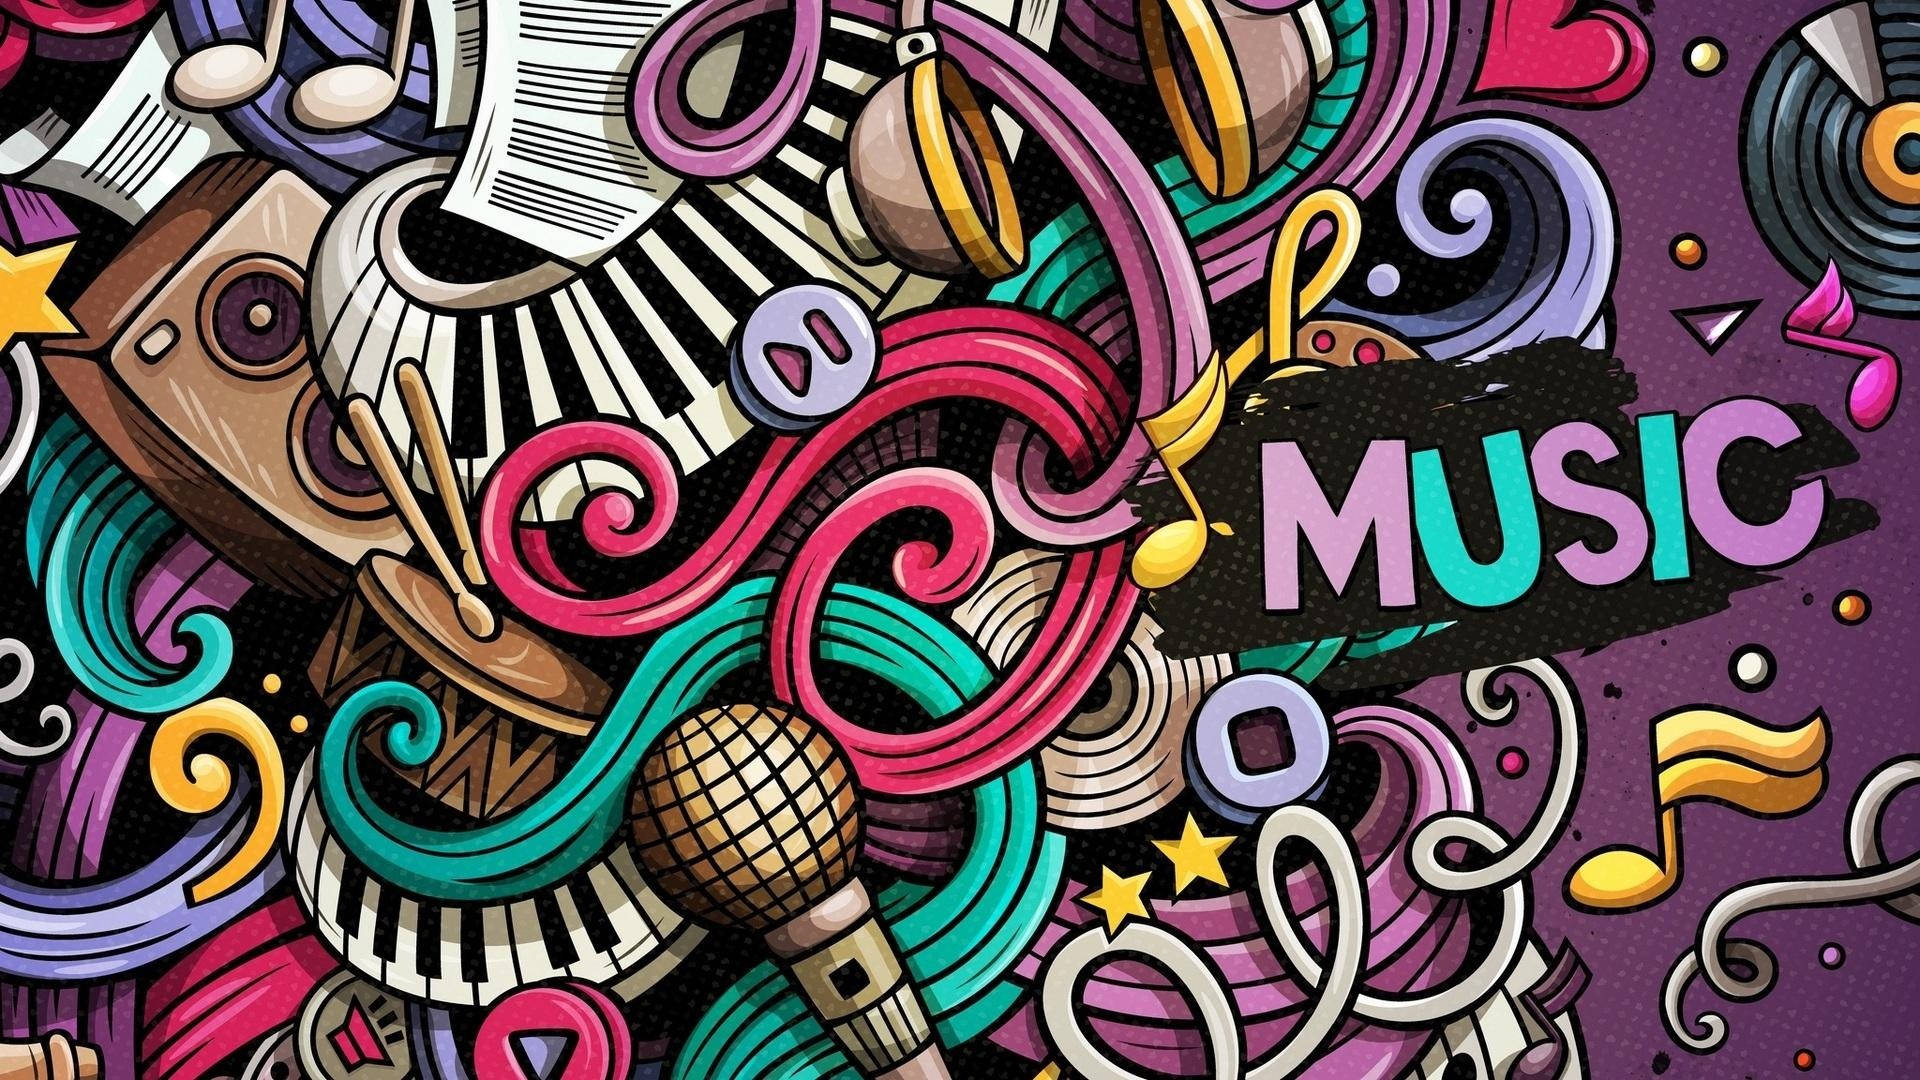 Free Music Aesthetic Wallpaper Downloads 300 Music Aesthetic Wallpapers  for FREE  Wallpaperscom